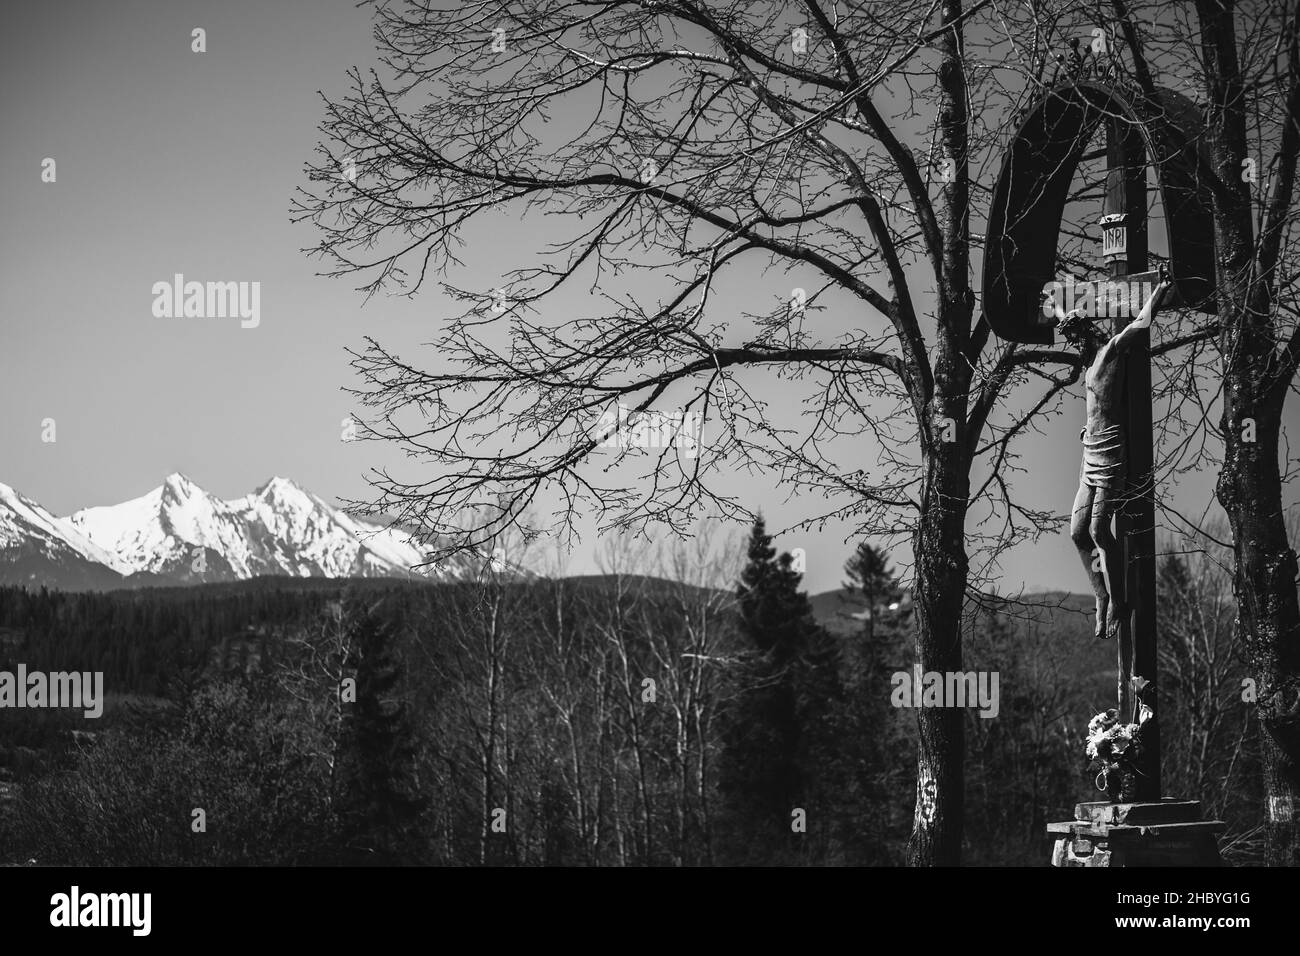 Strassenkreuze, Baum, tatra Berge Hintergrund, s&w, Slowakei Stockfoto